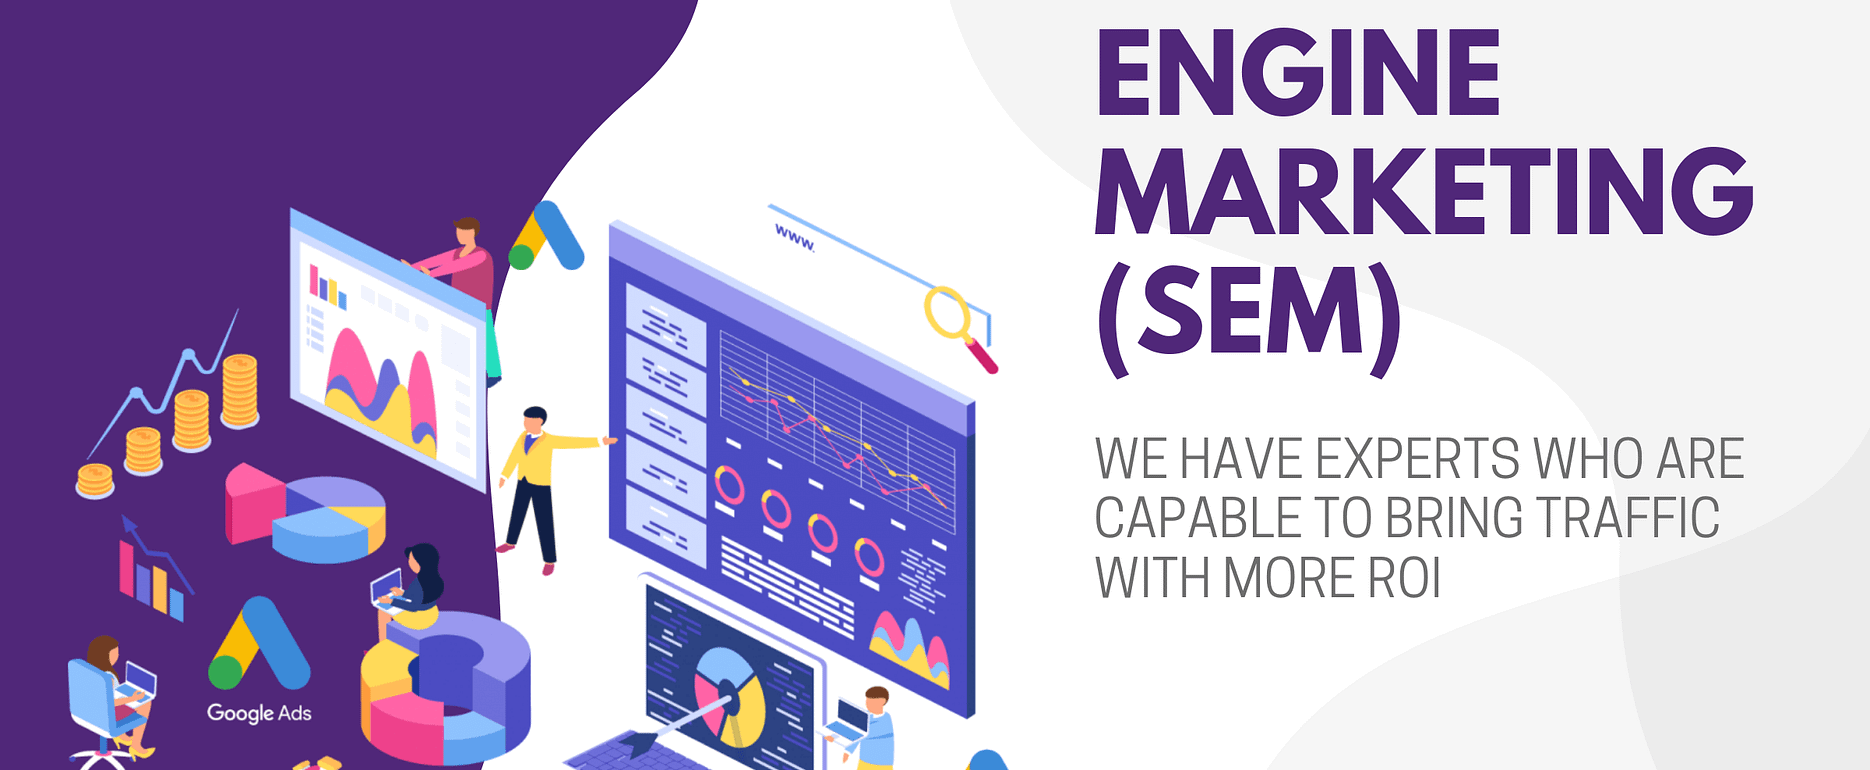 Search Engine Marketing SEM